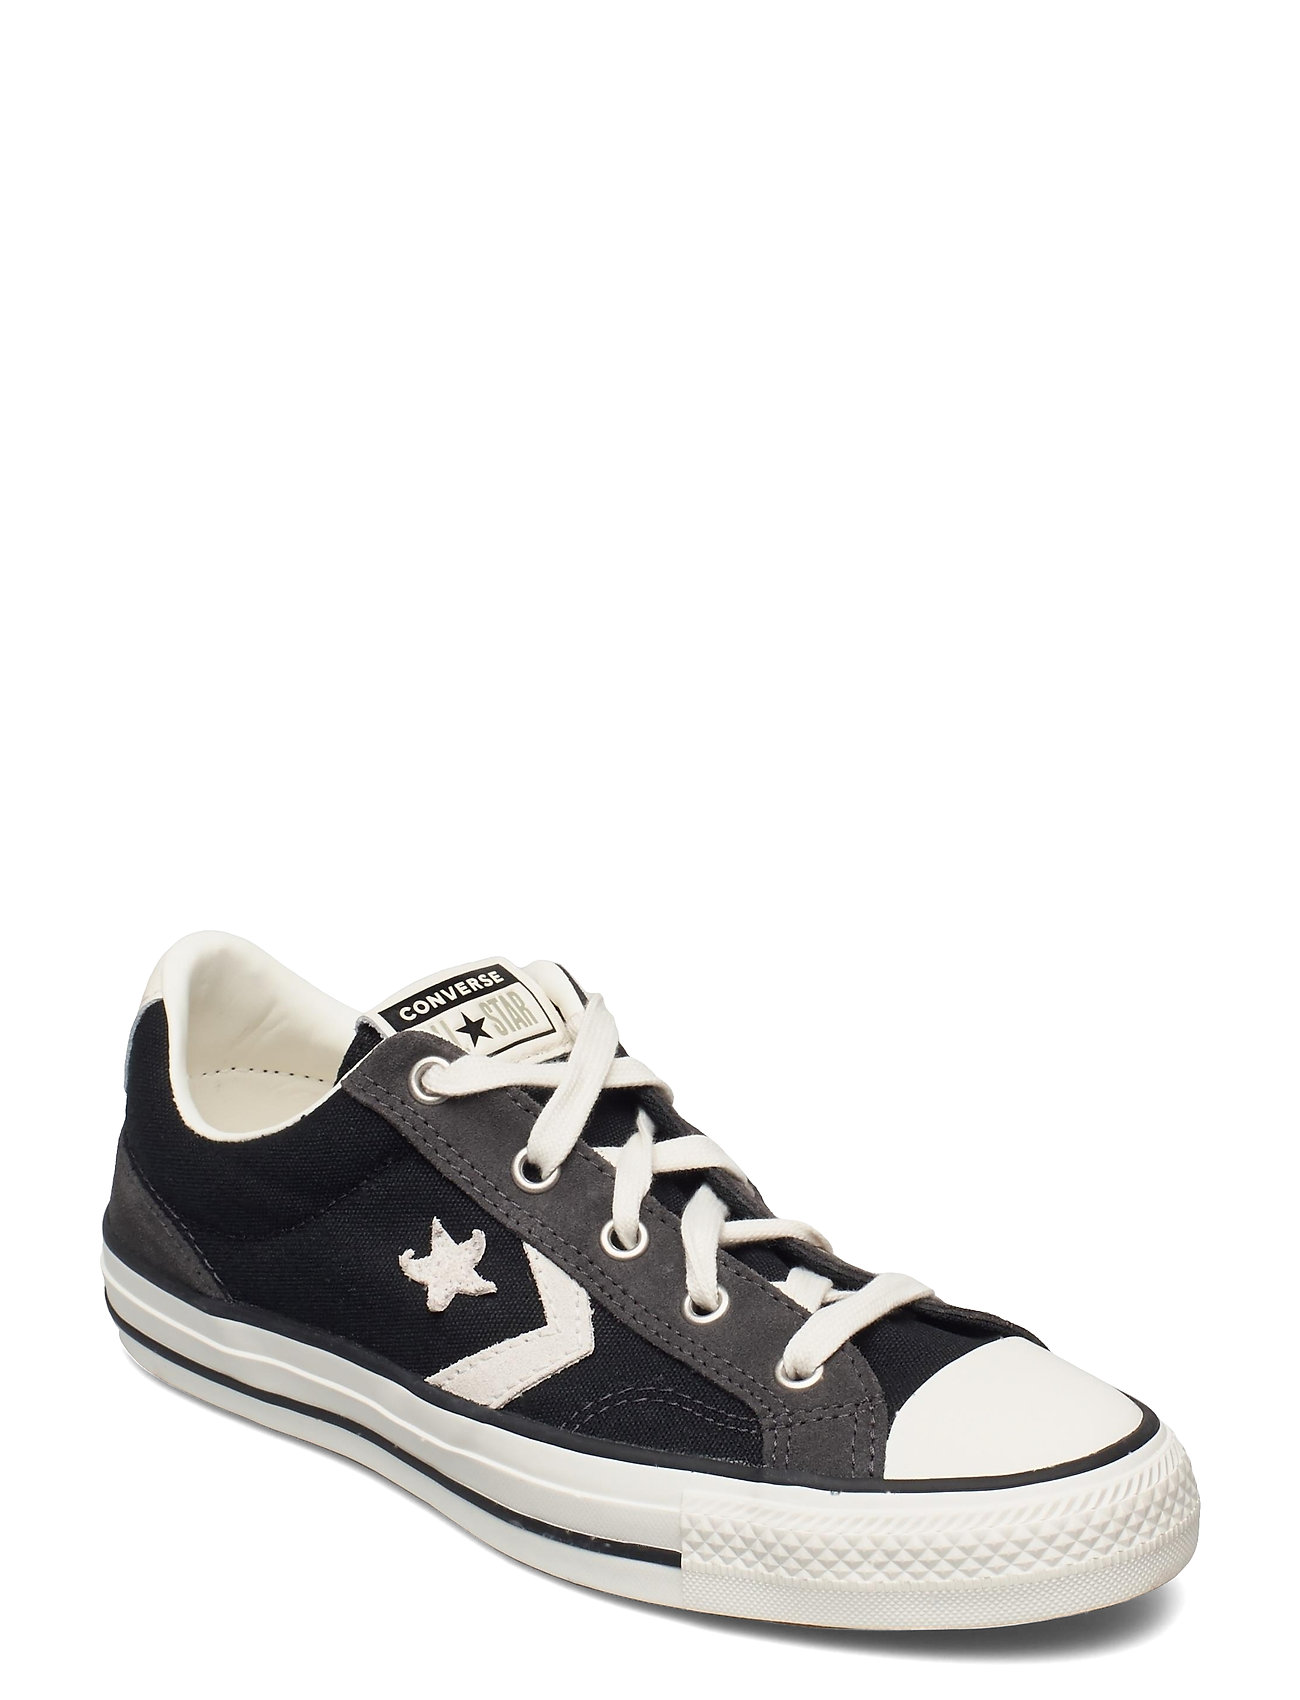 Star Player Ox Black/Egret/Storm Wind Matalavartiset Sneakerit Tennarit Musta Converse